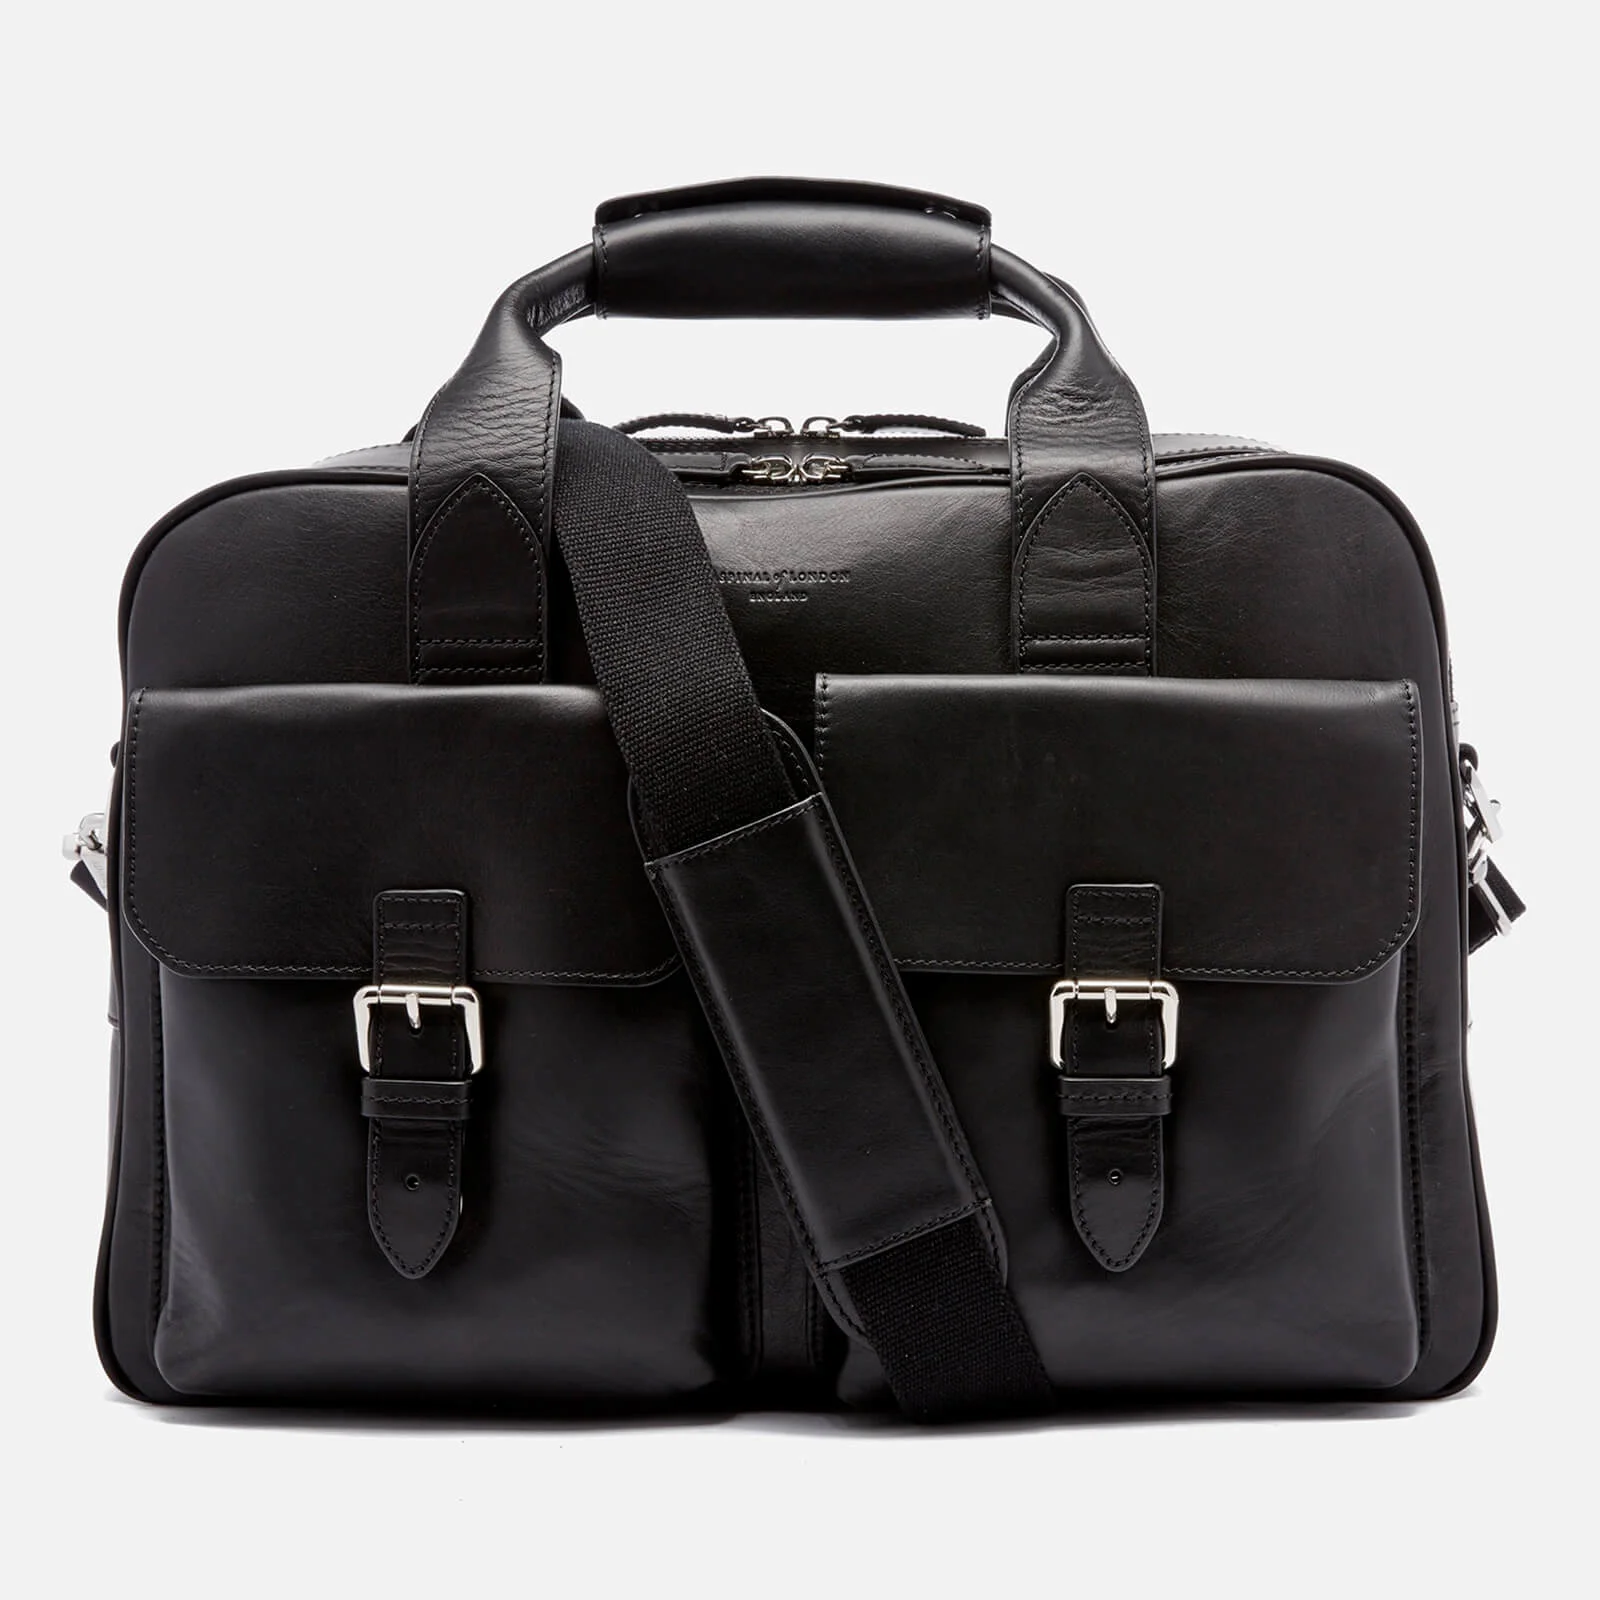 Aspinal of London Men's Harrison Overnight Business Bag - Black Image 1